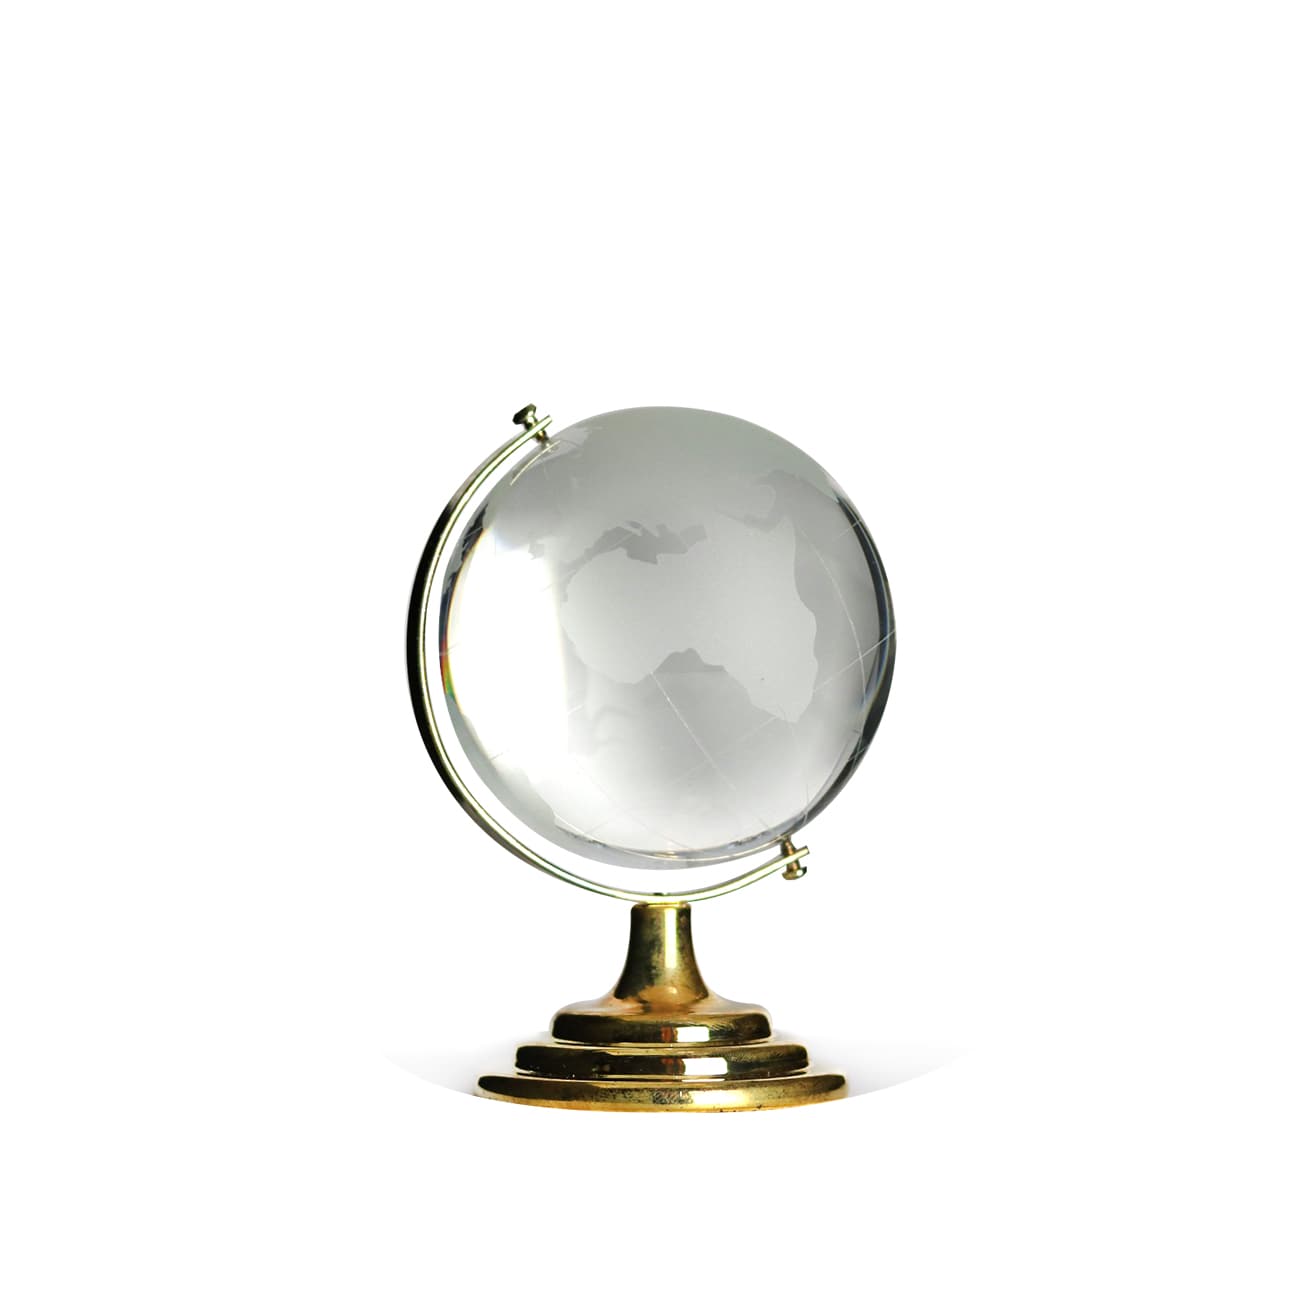 Boule de Cristal globe terrestre à prix de gros - Minerals Store